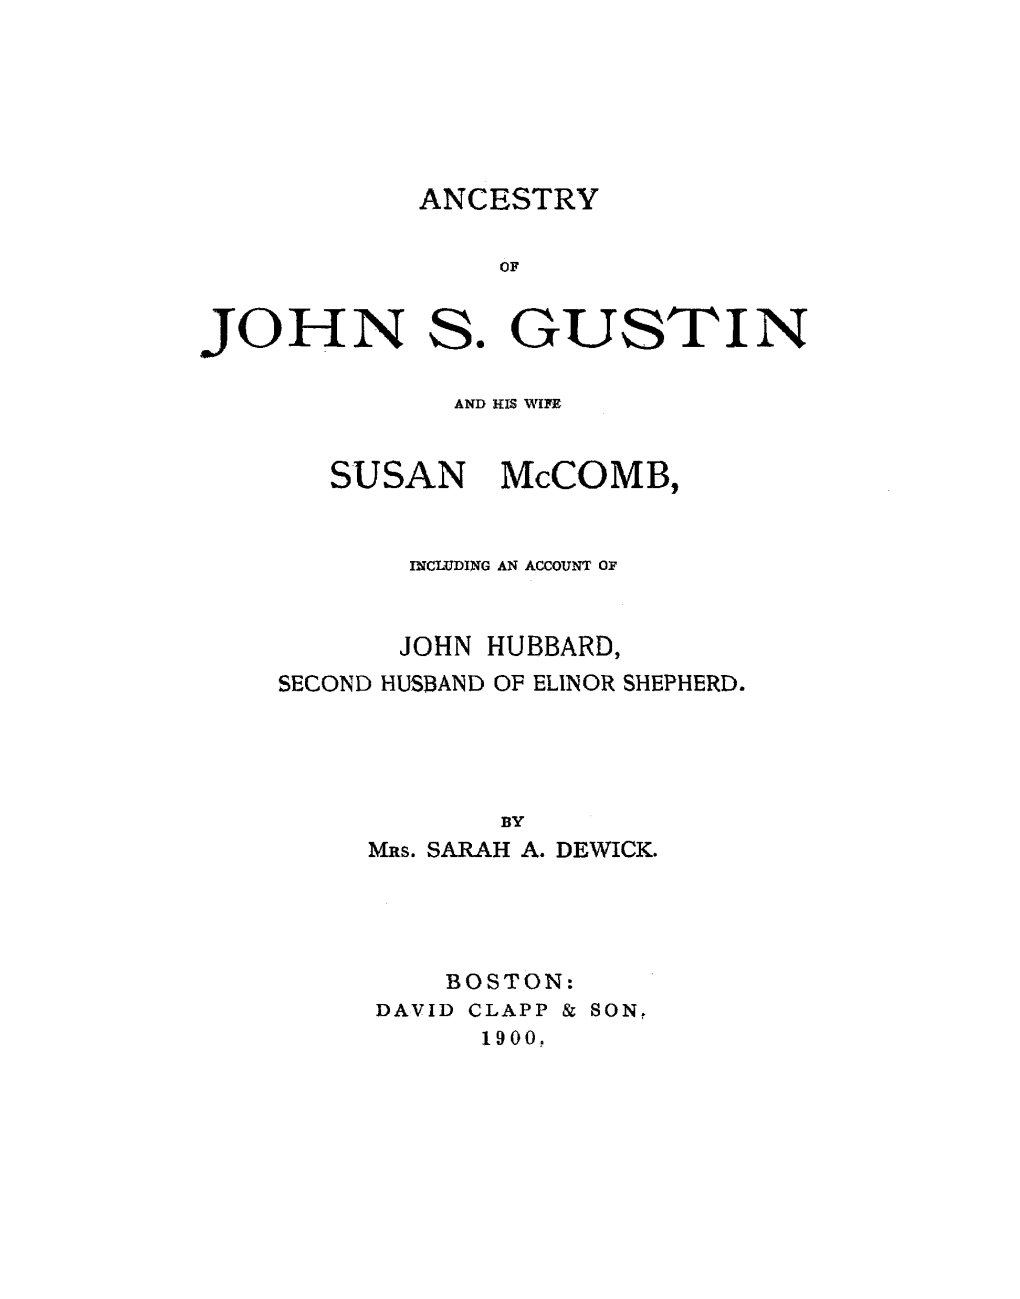 John S. Gustin